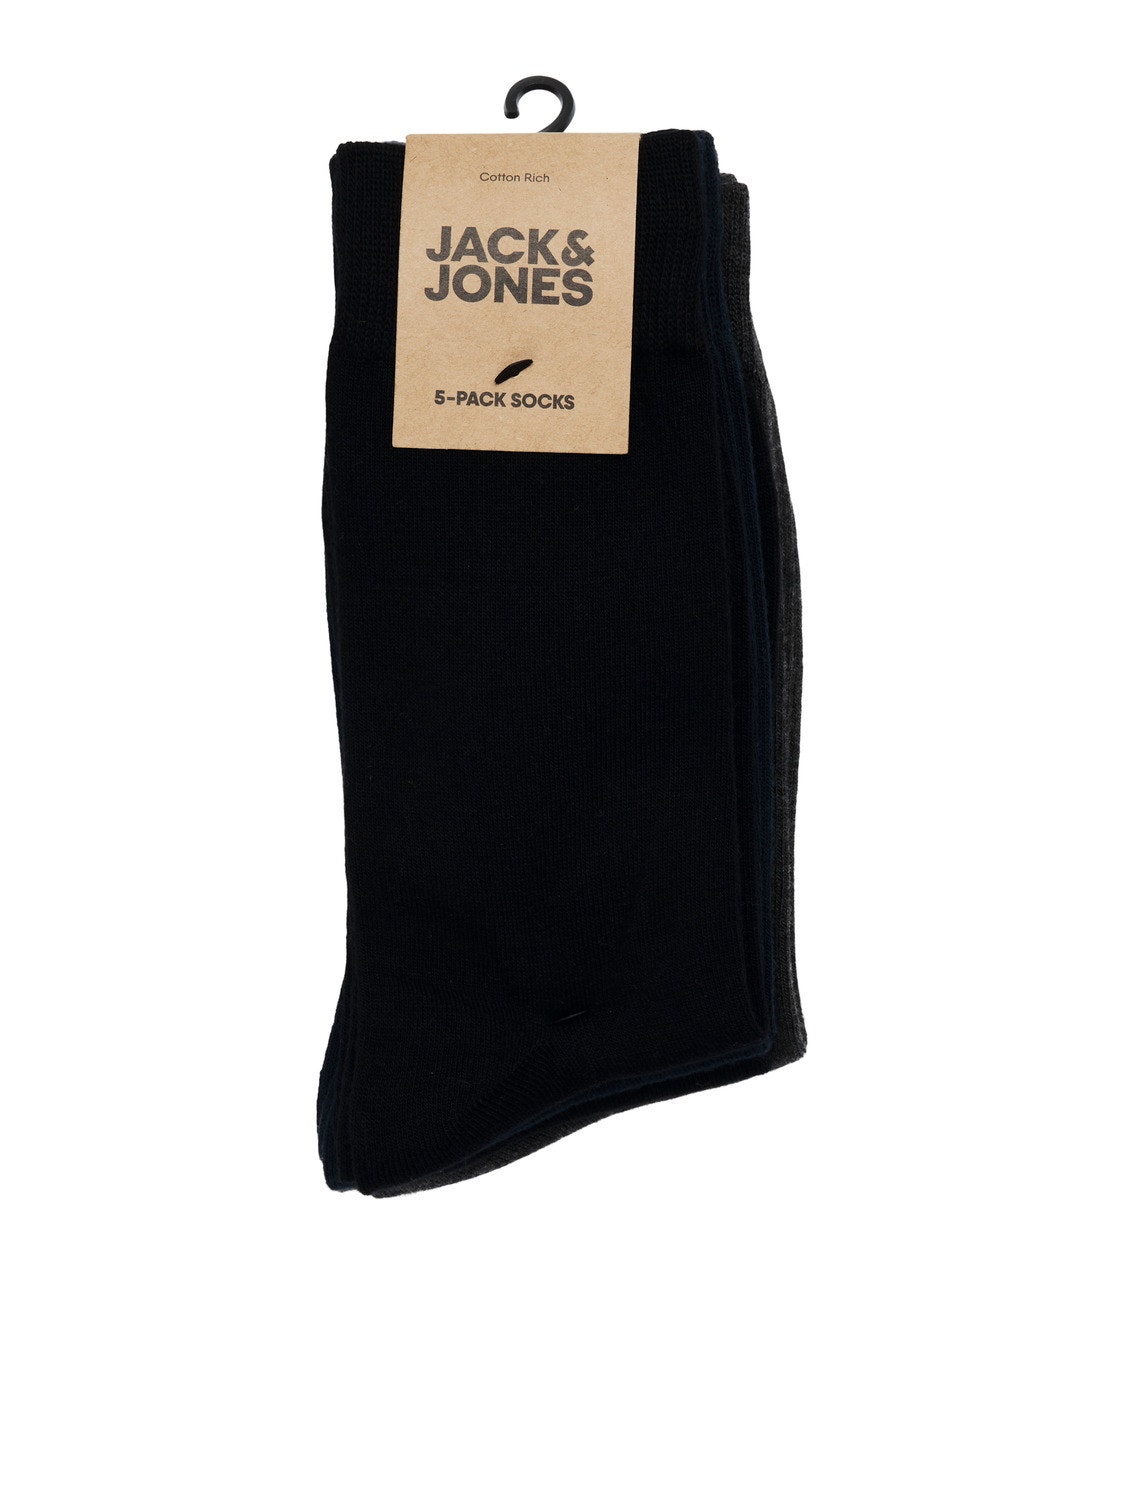 Jack & Jones 5-pak Skarpeta -Black - 12198027